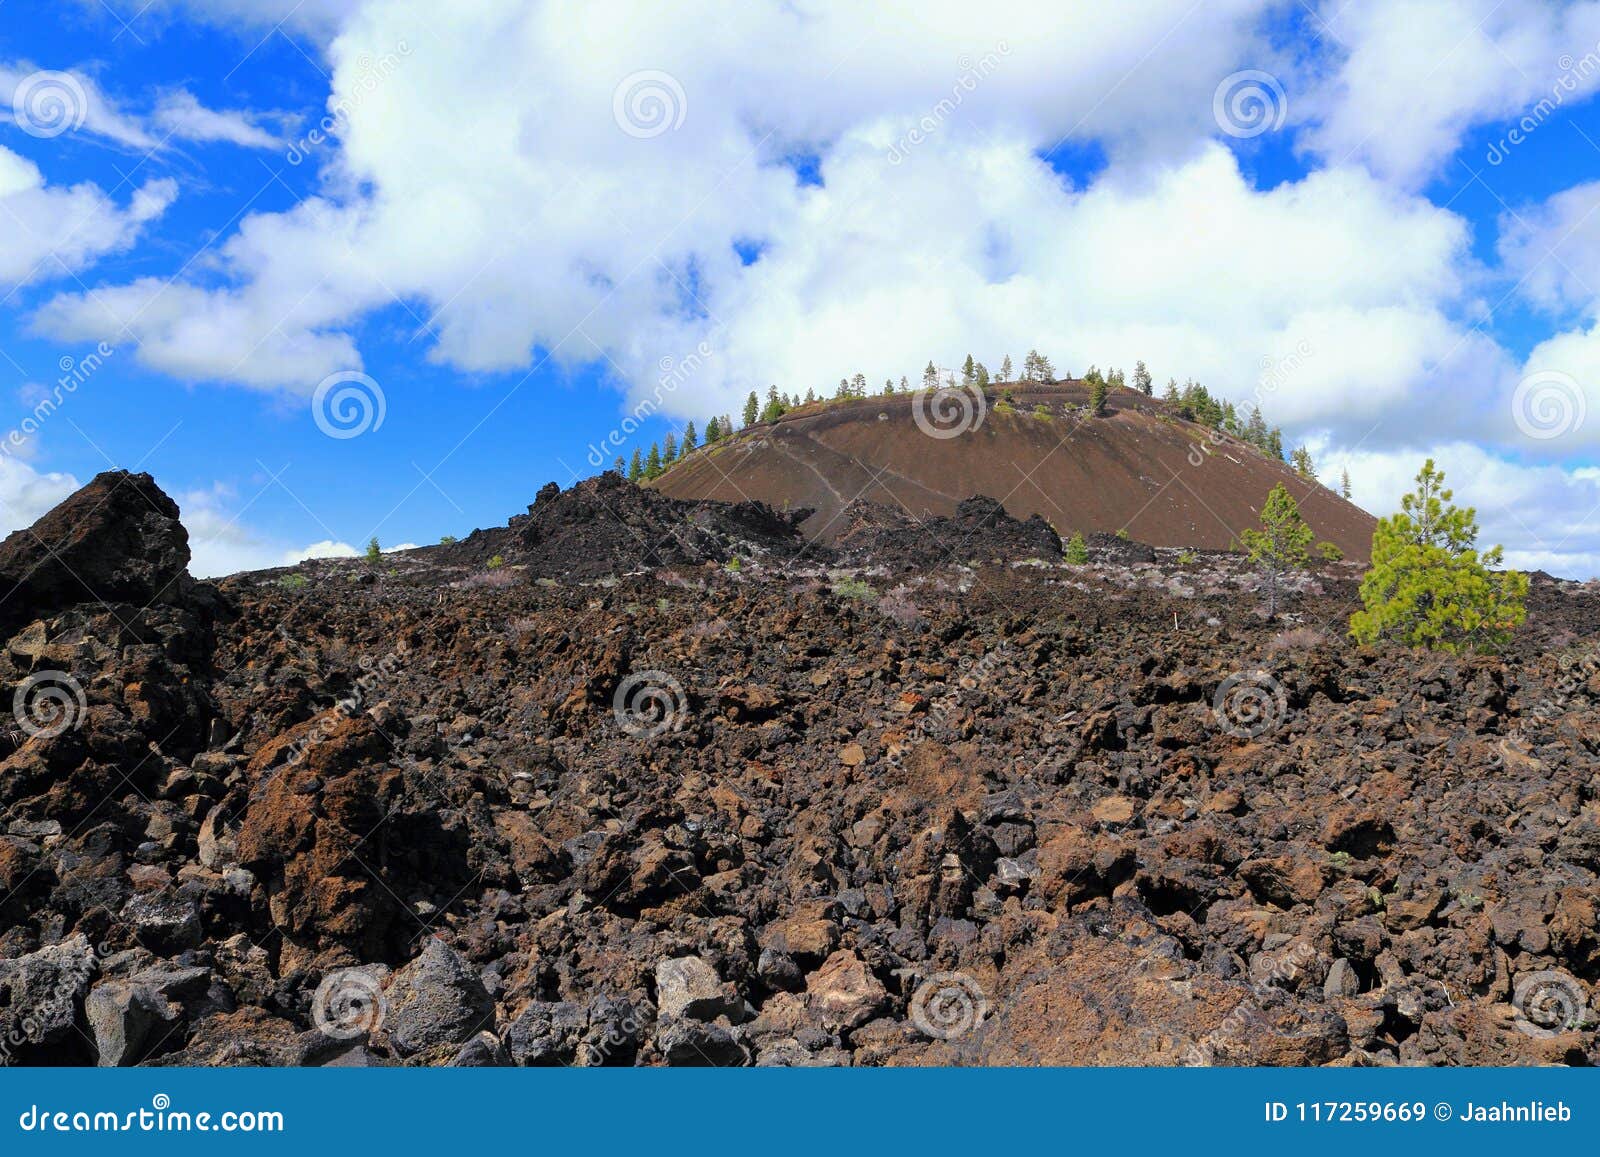 newberry national volcanic monument, oregon, usa